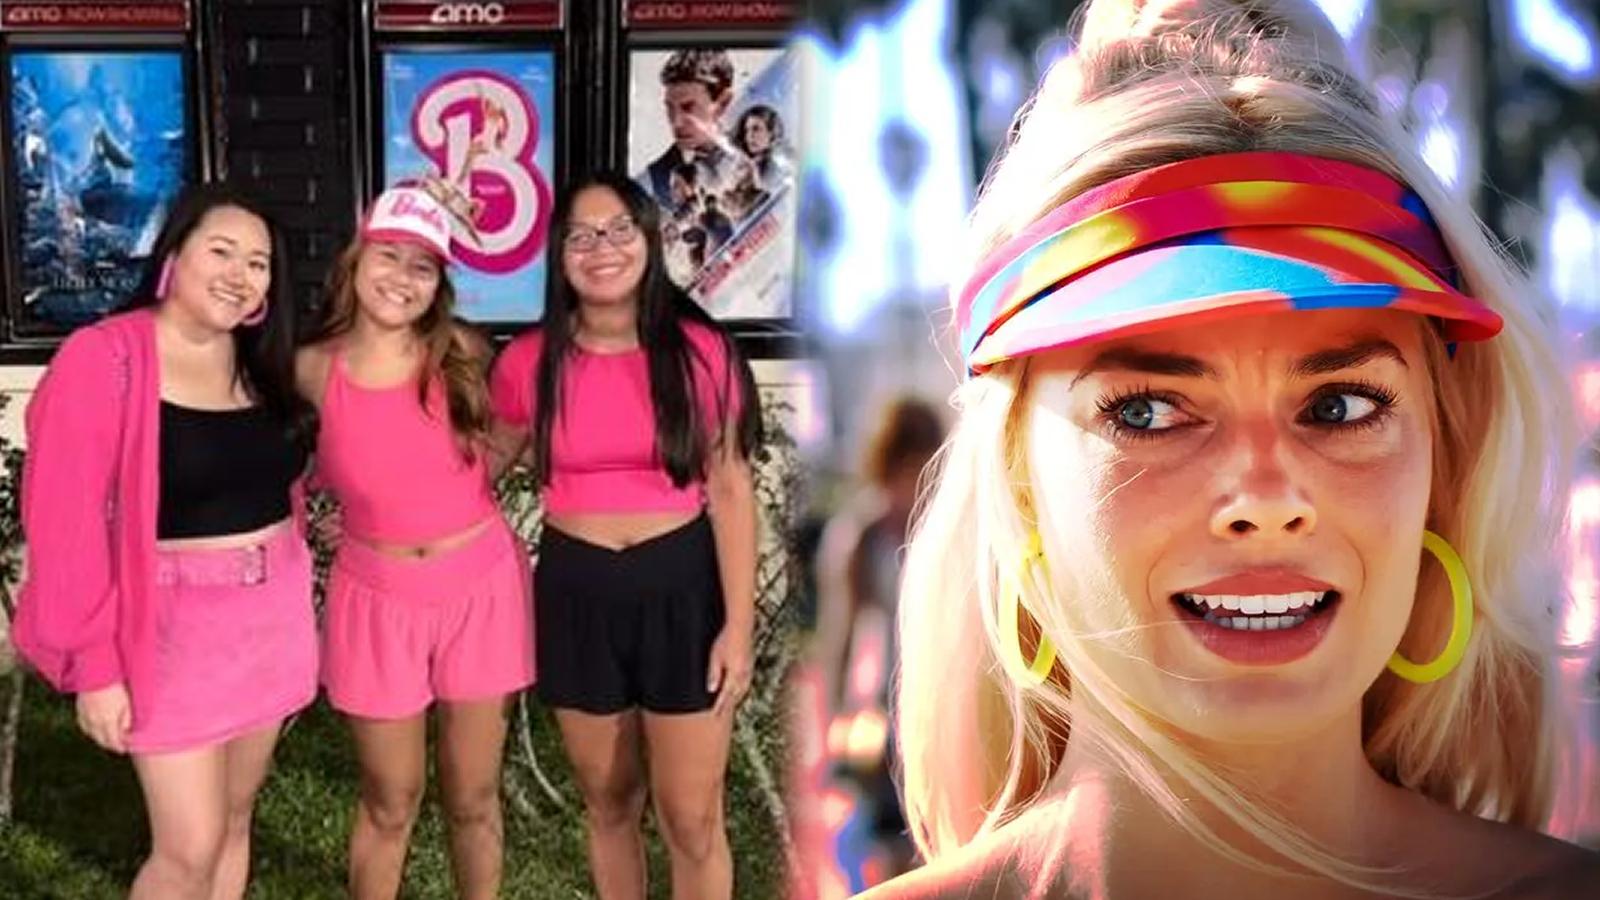 Viral TikTok shows women attending Barbie insulted